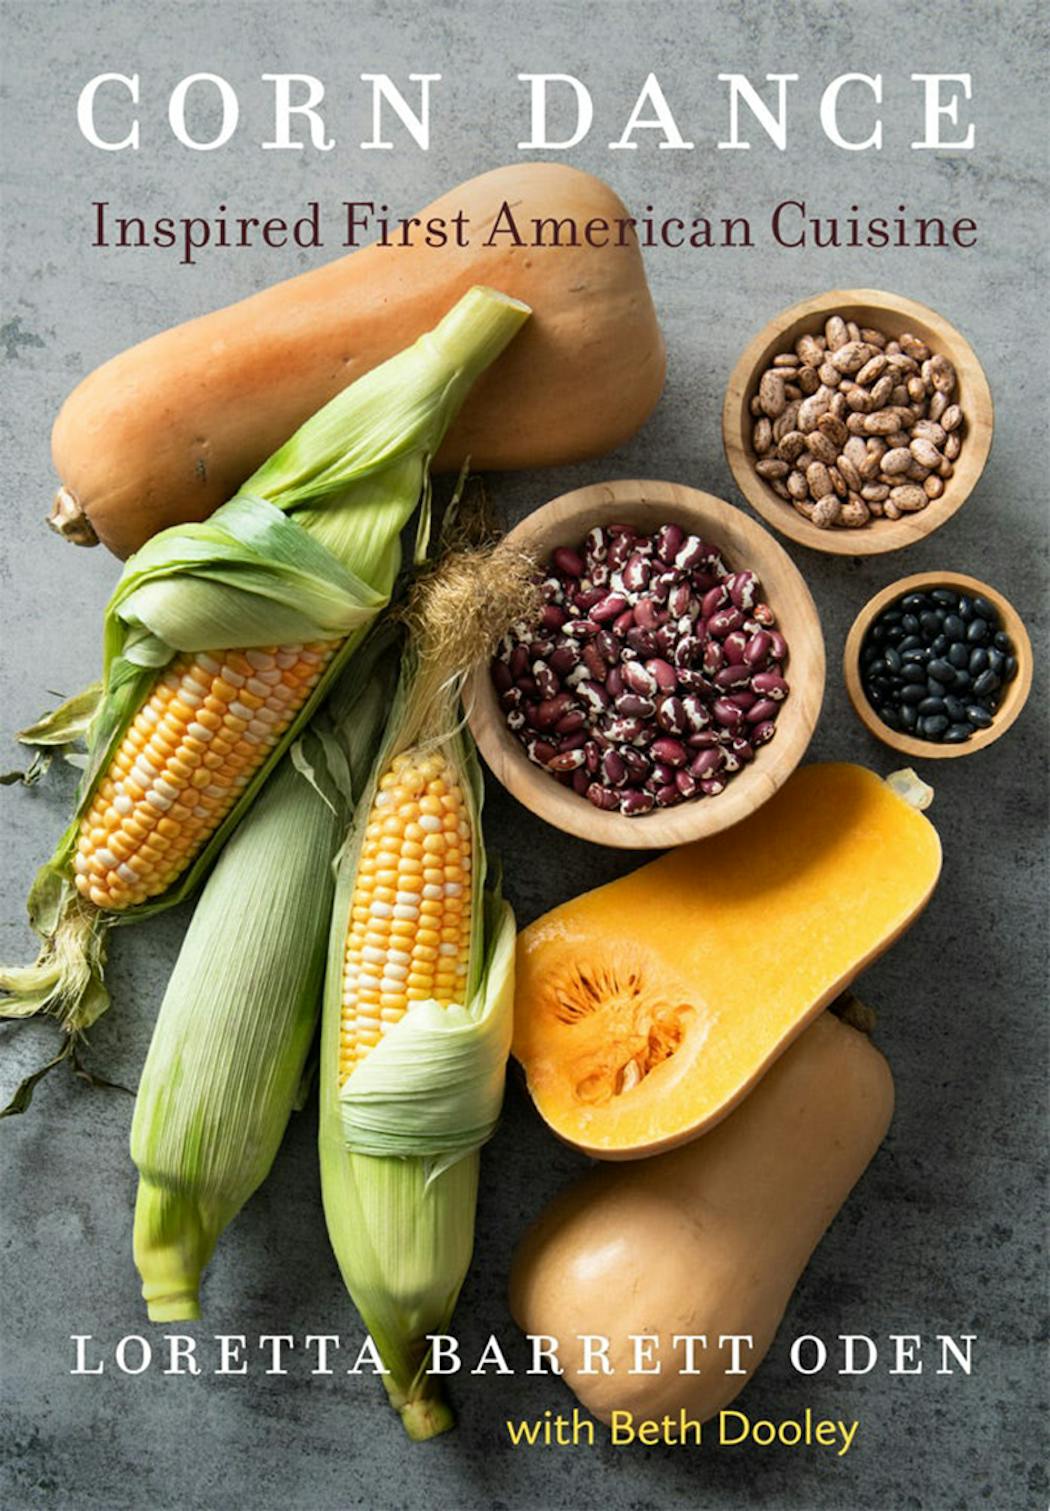 “Corn Dance” is part cookbook, part memoir.